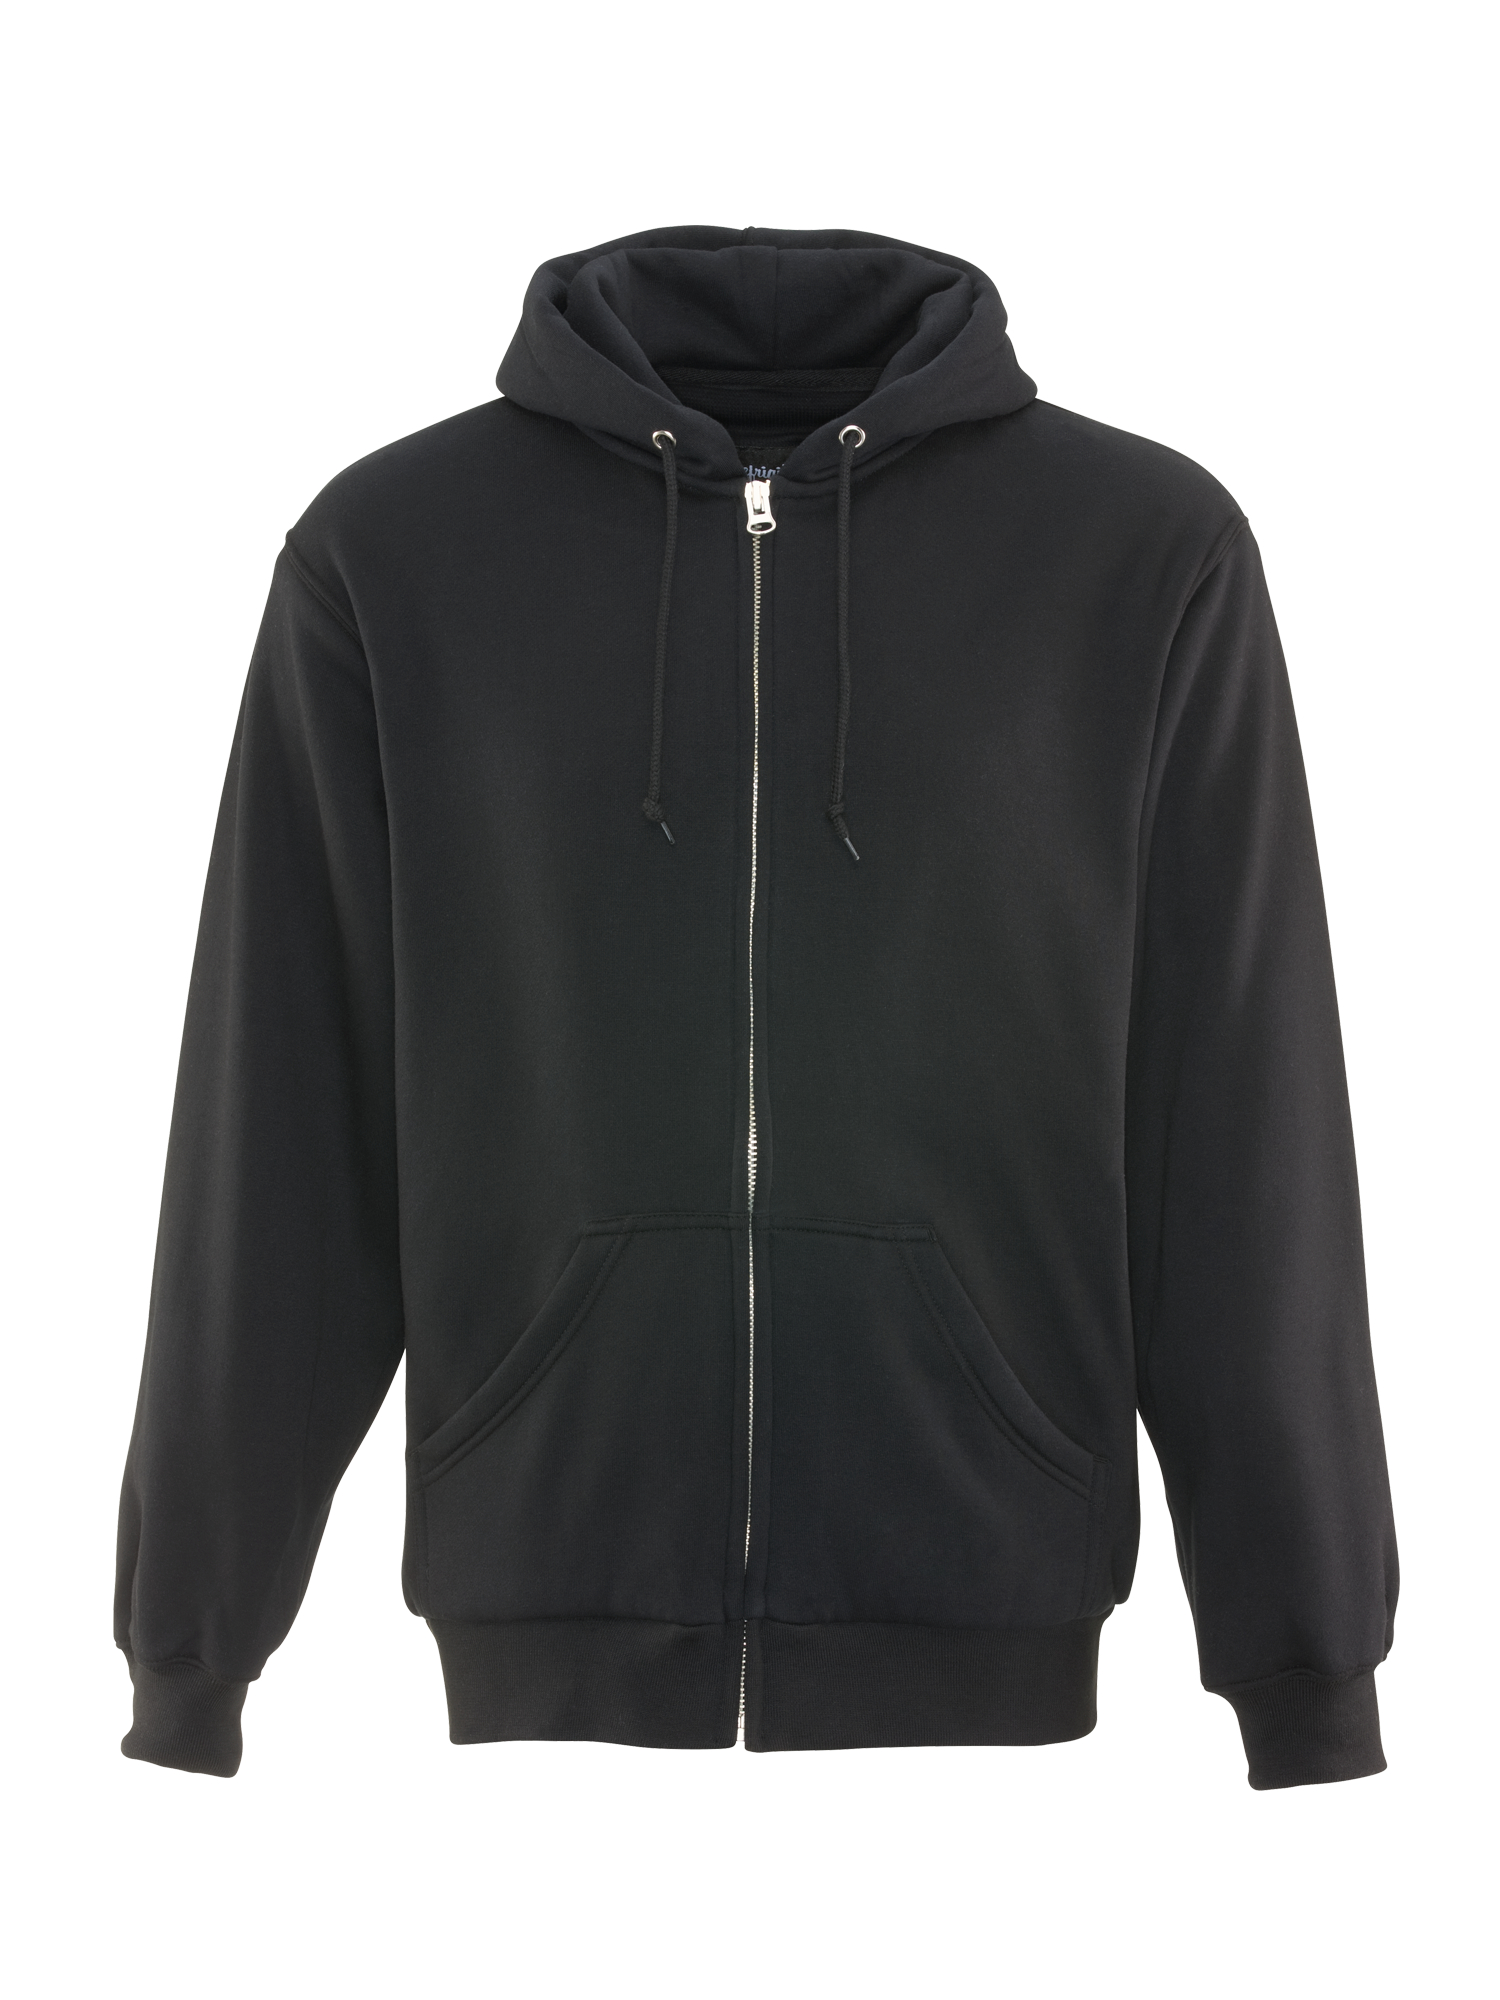 RefrigiWear Thermal Lined Sweatshirt | Black | Fit: Big & Tall | Ragg Wool/Fabric/Fleece | S